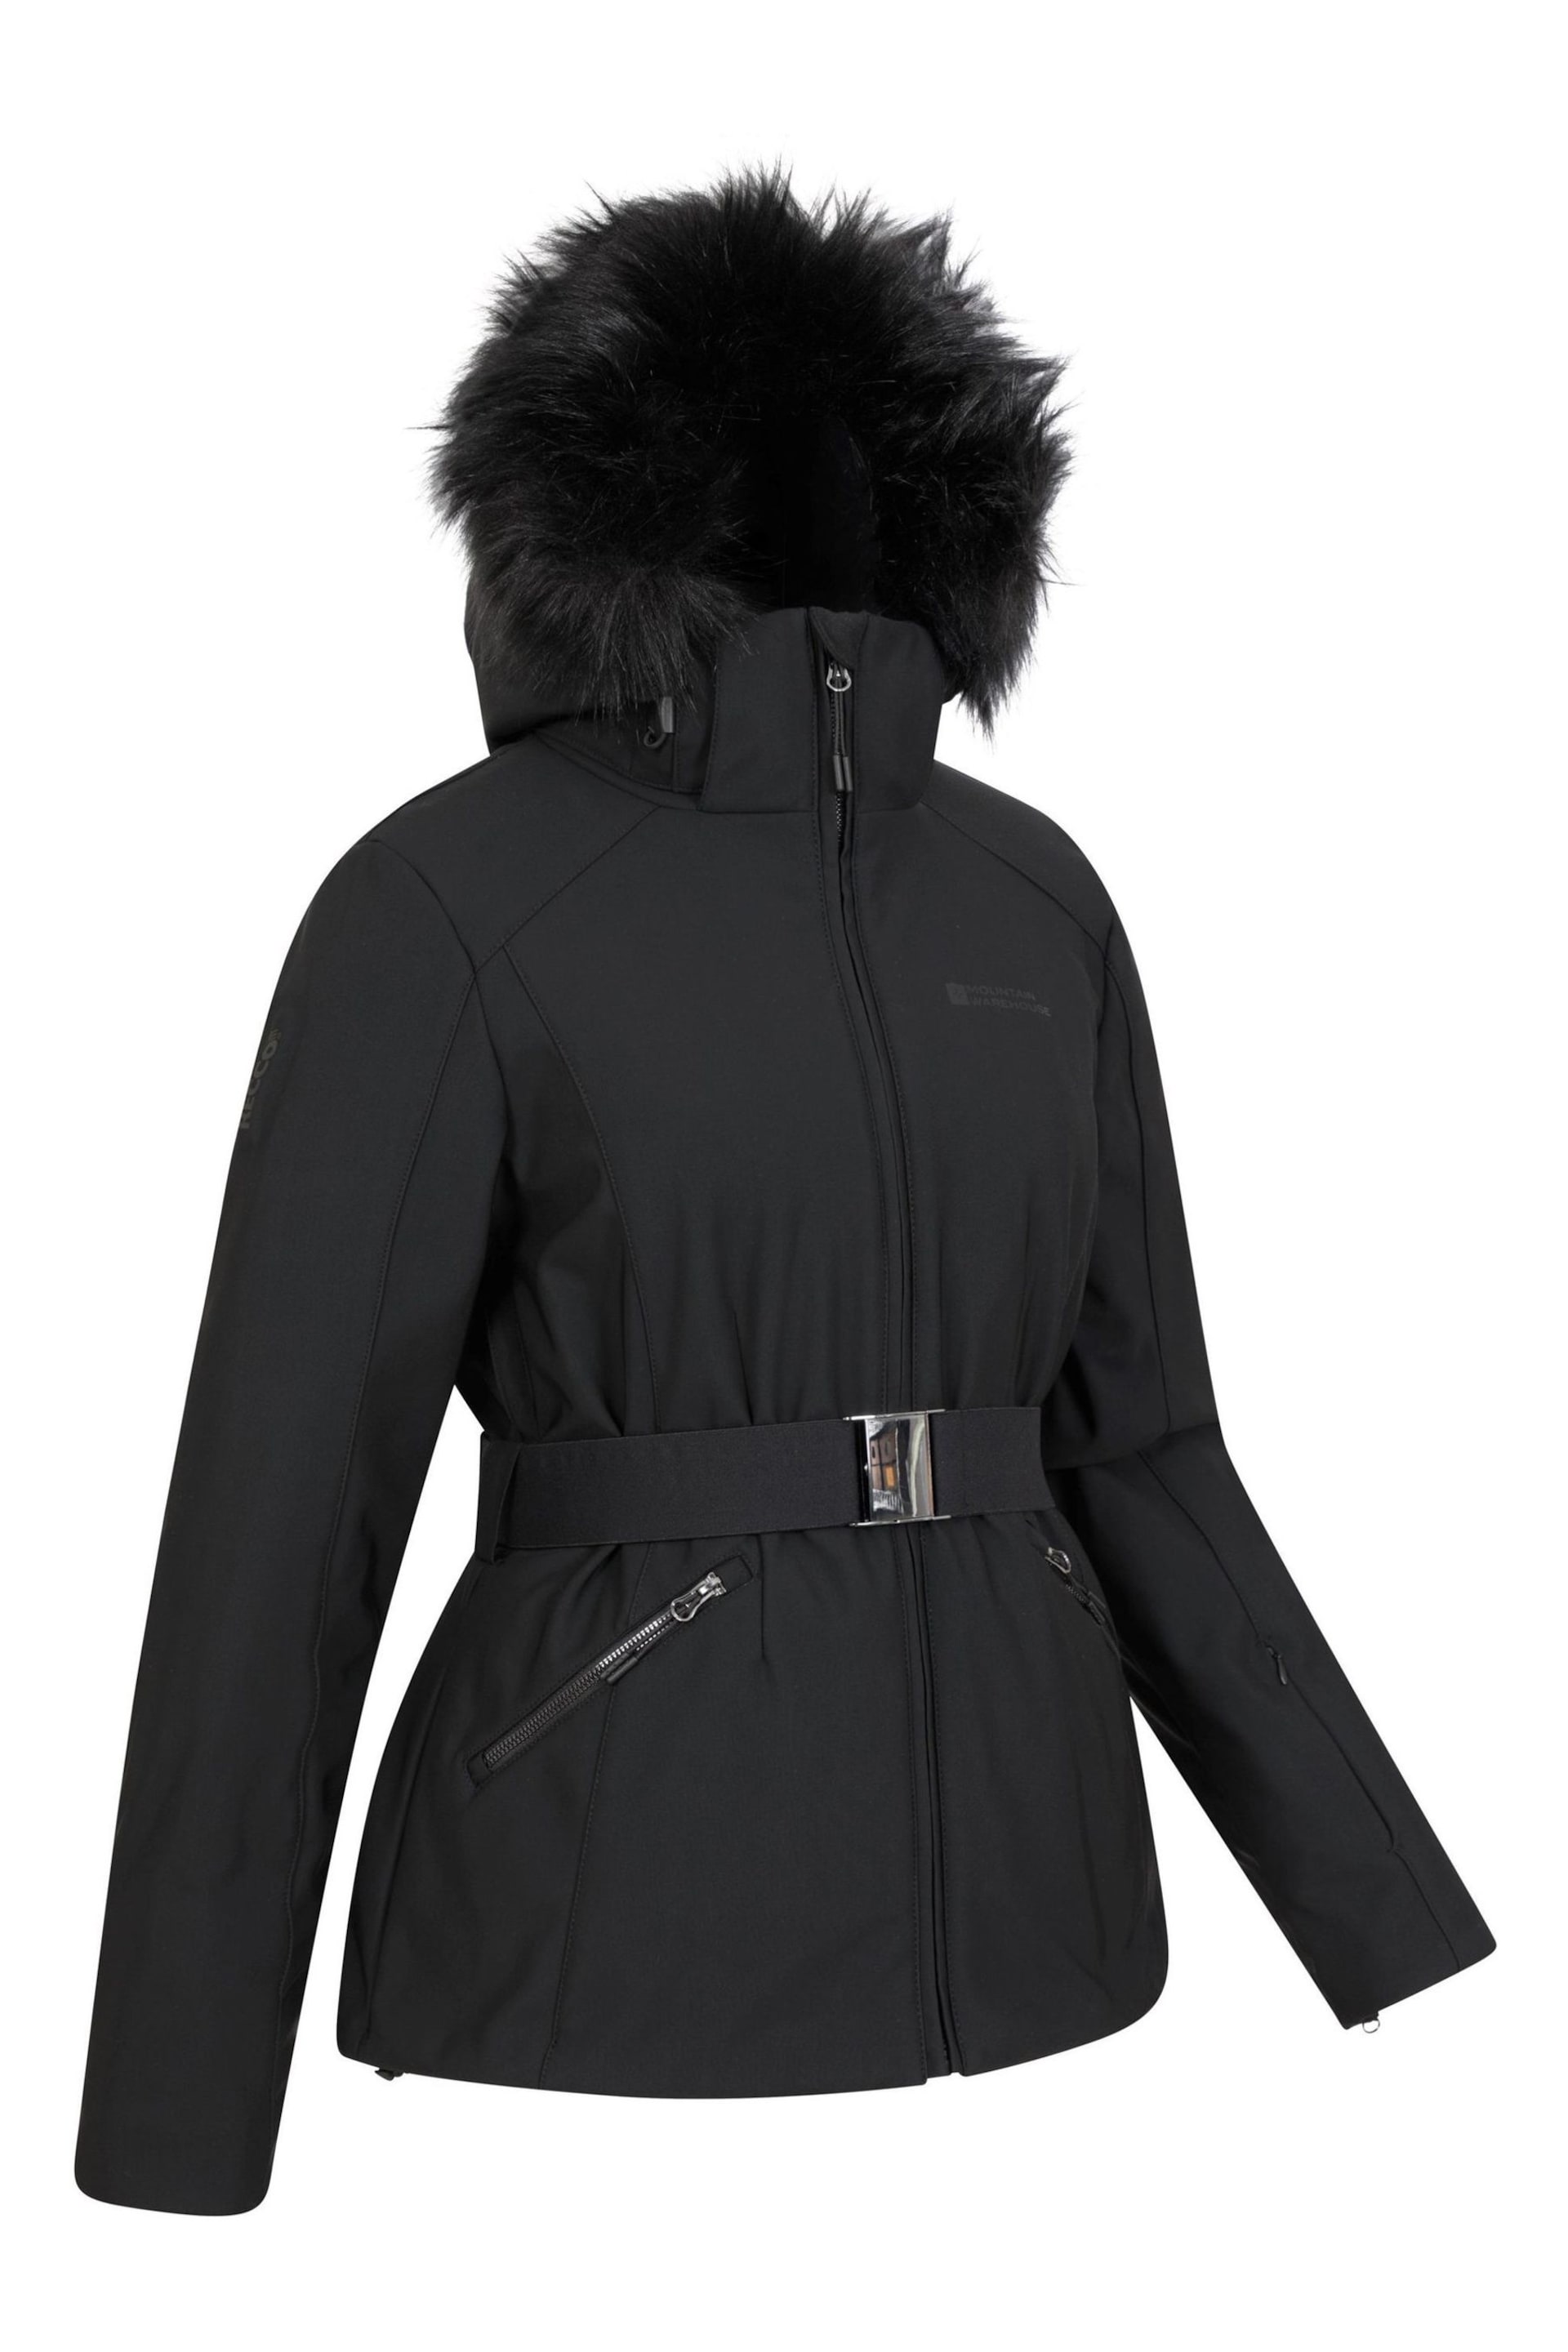 Mountain Warehouse Black Womens Swiss Recco Ski Coats - Image 5 of 7